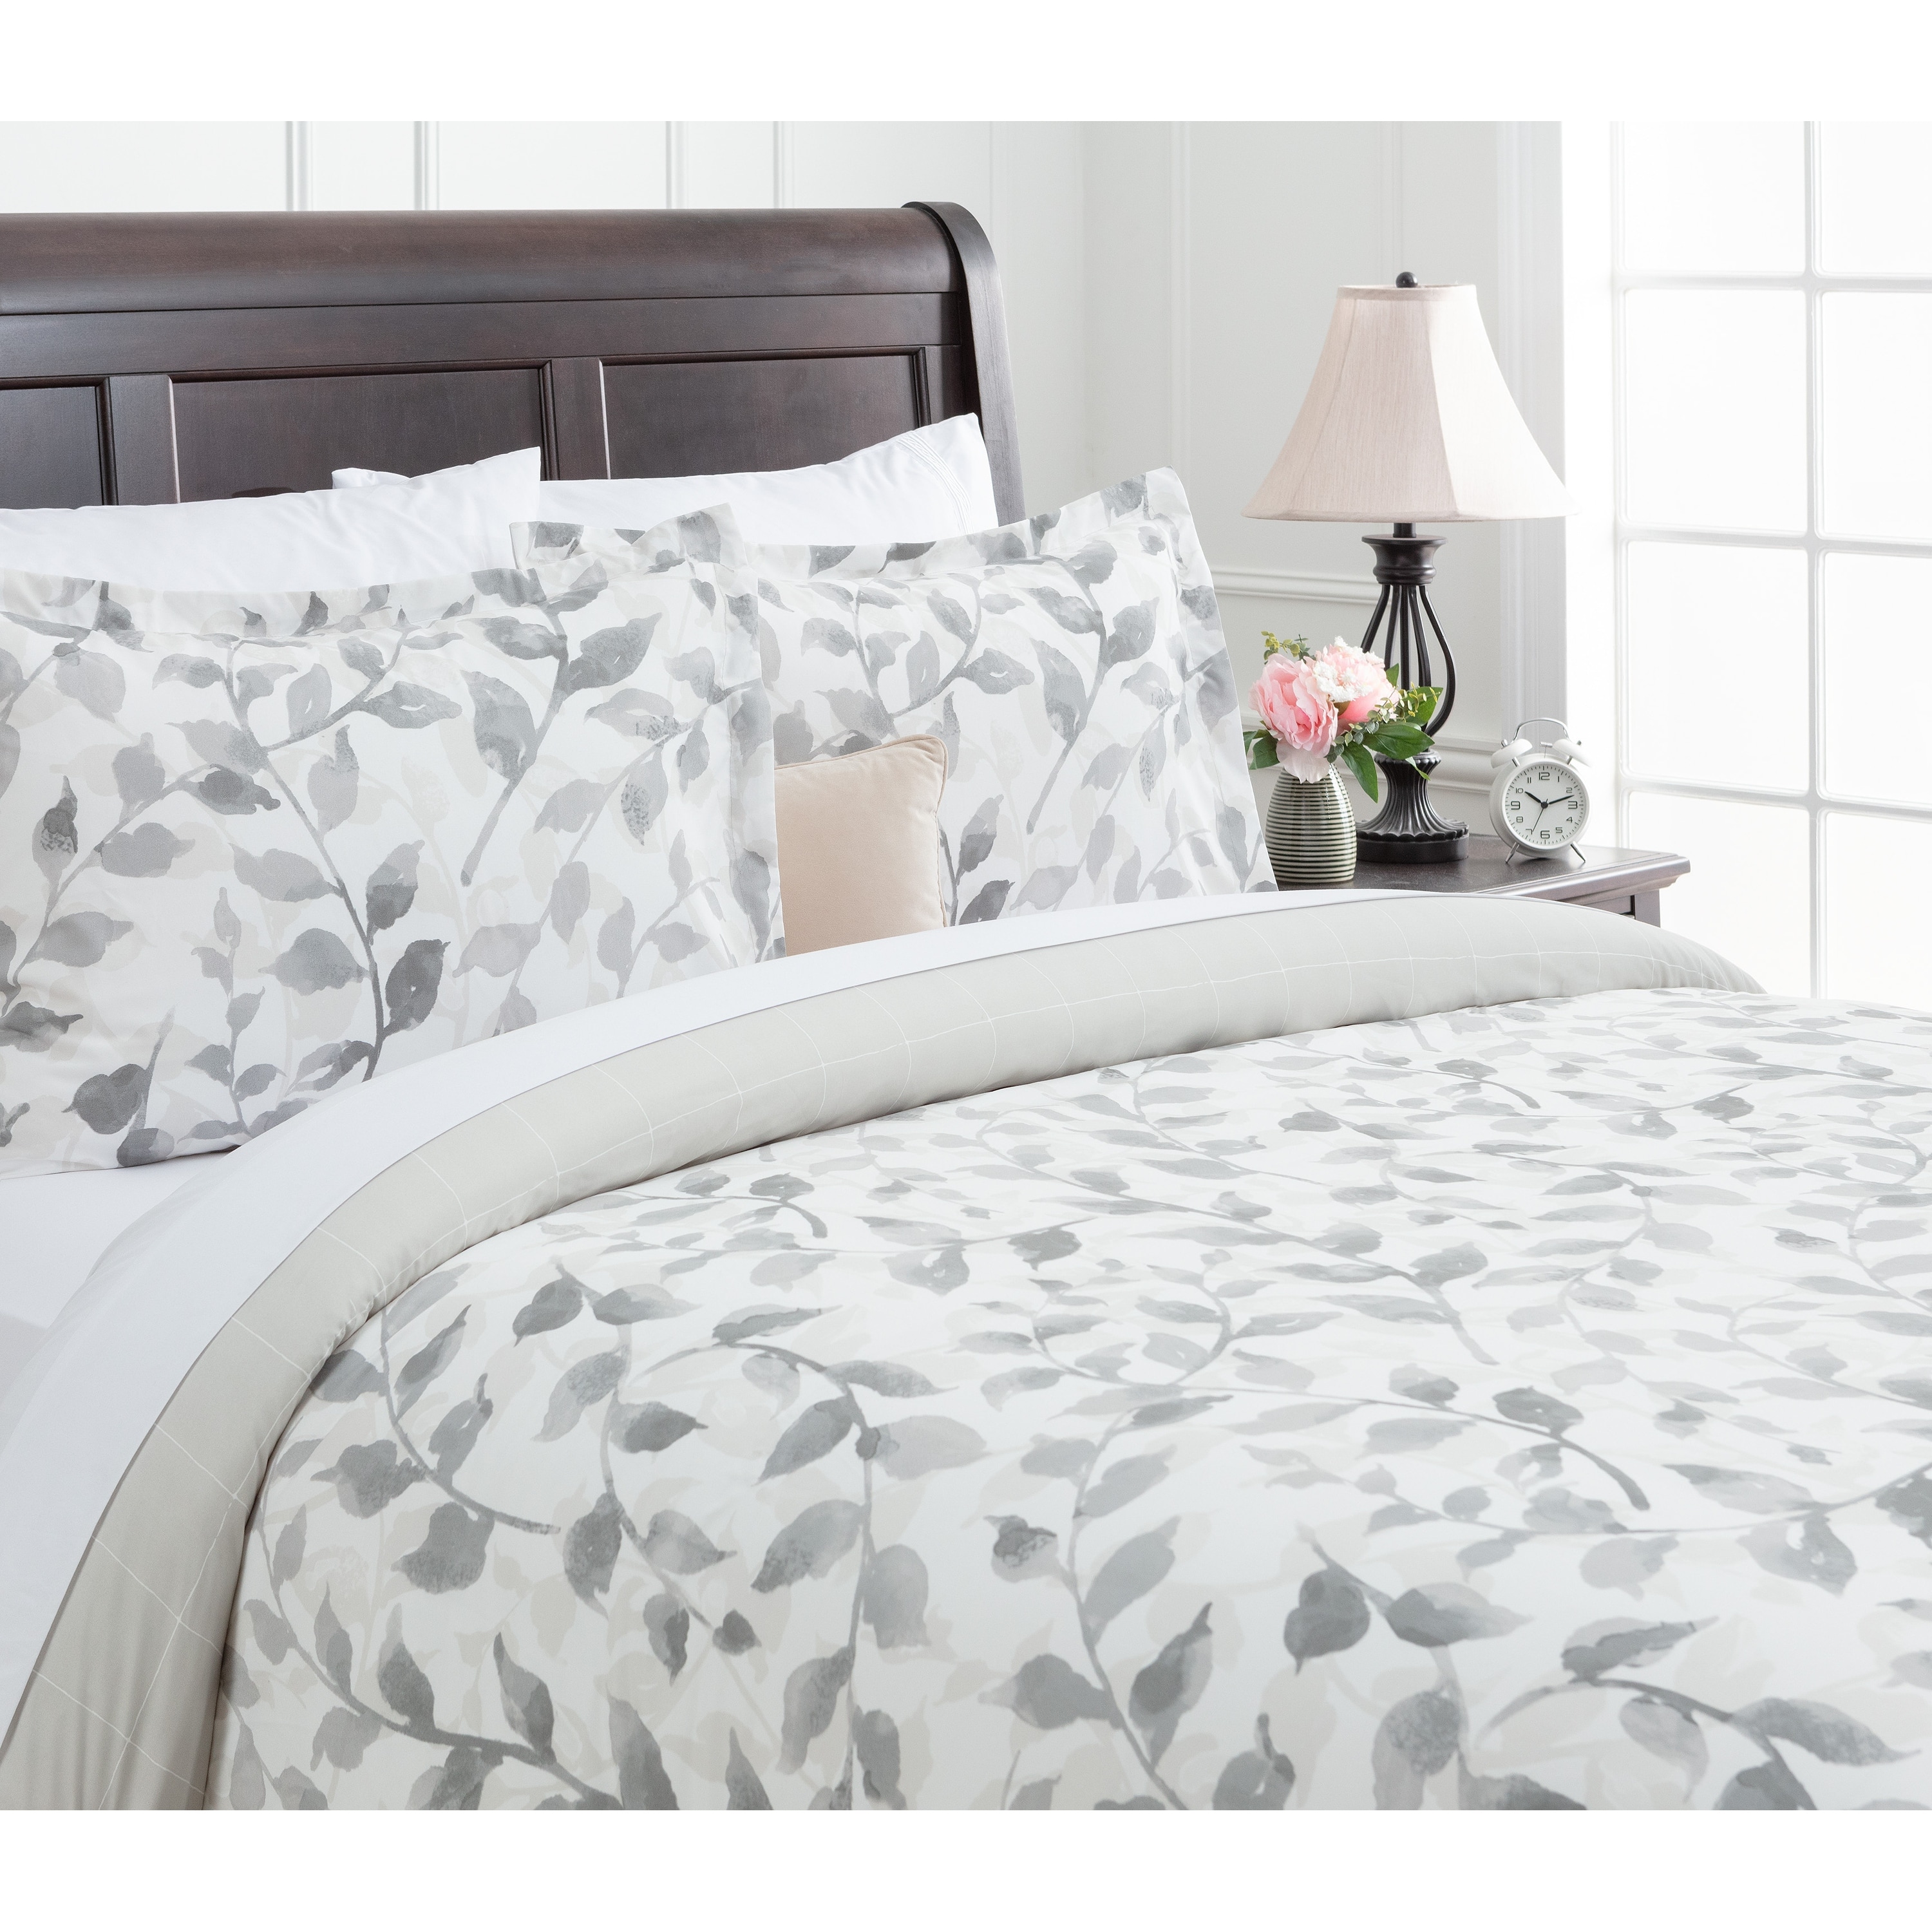 Bedding Set Leaves，Animal Fitted Sheet Set Bed Set Mattress Cover